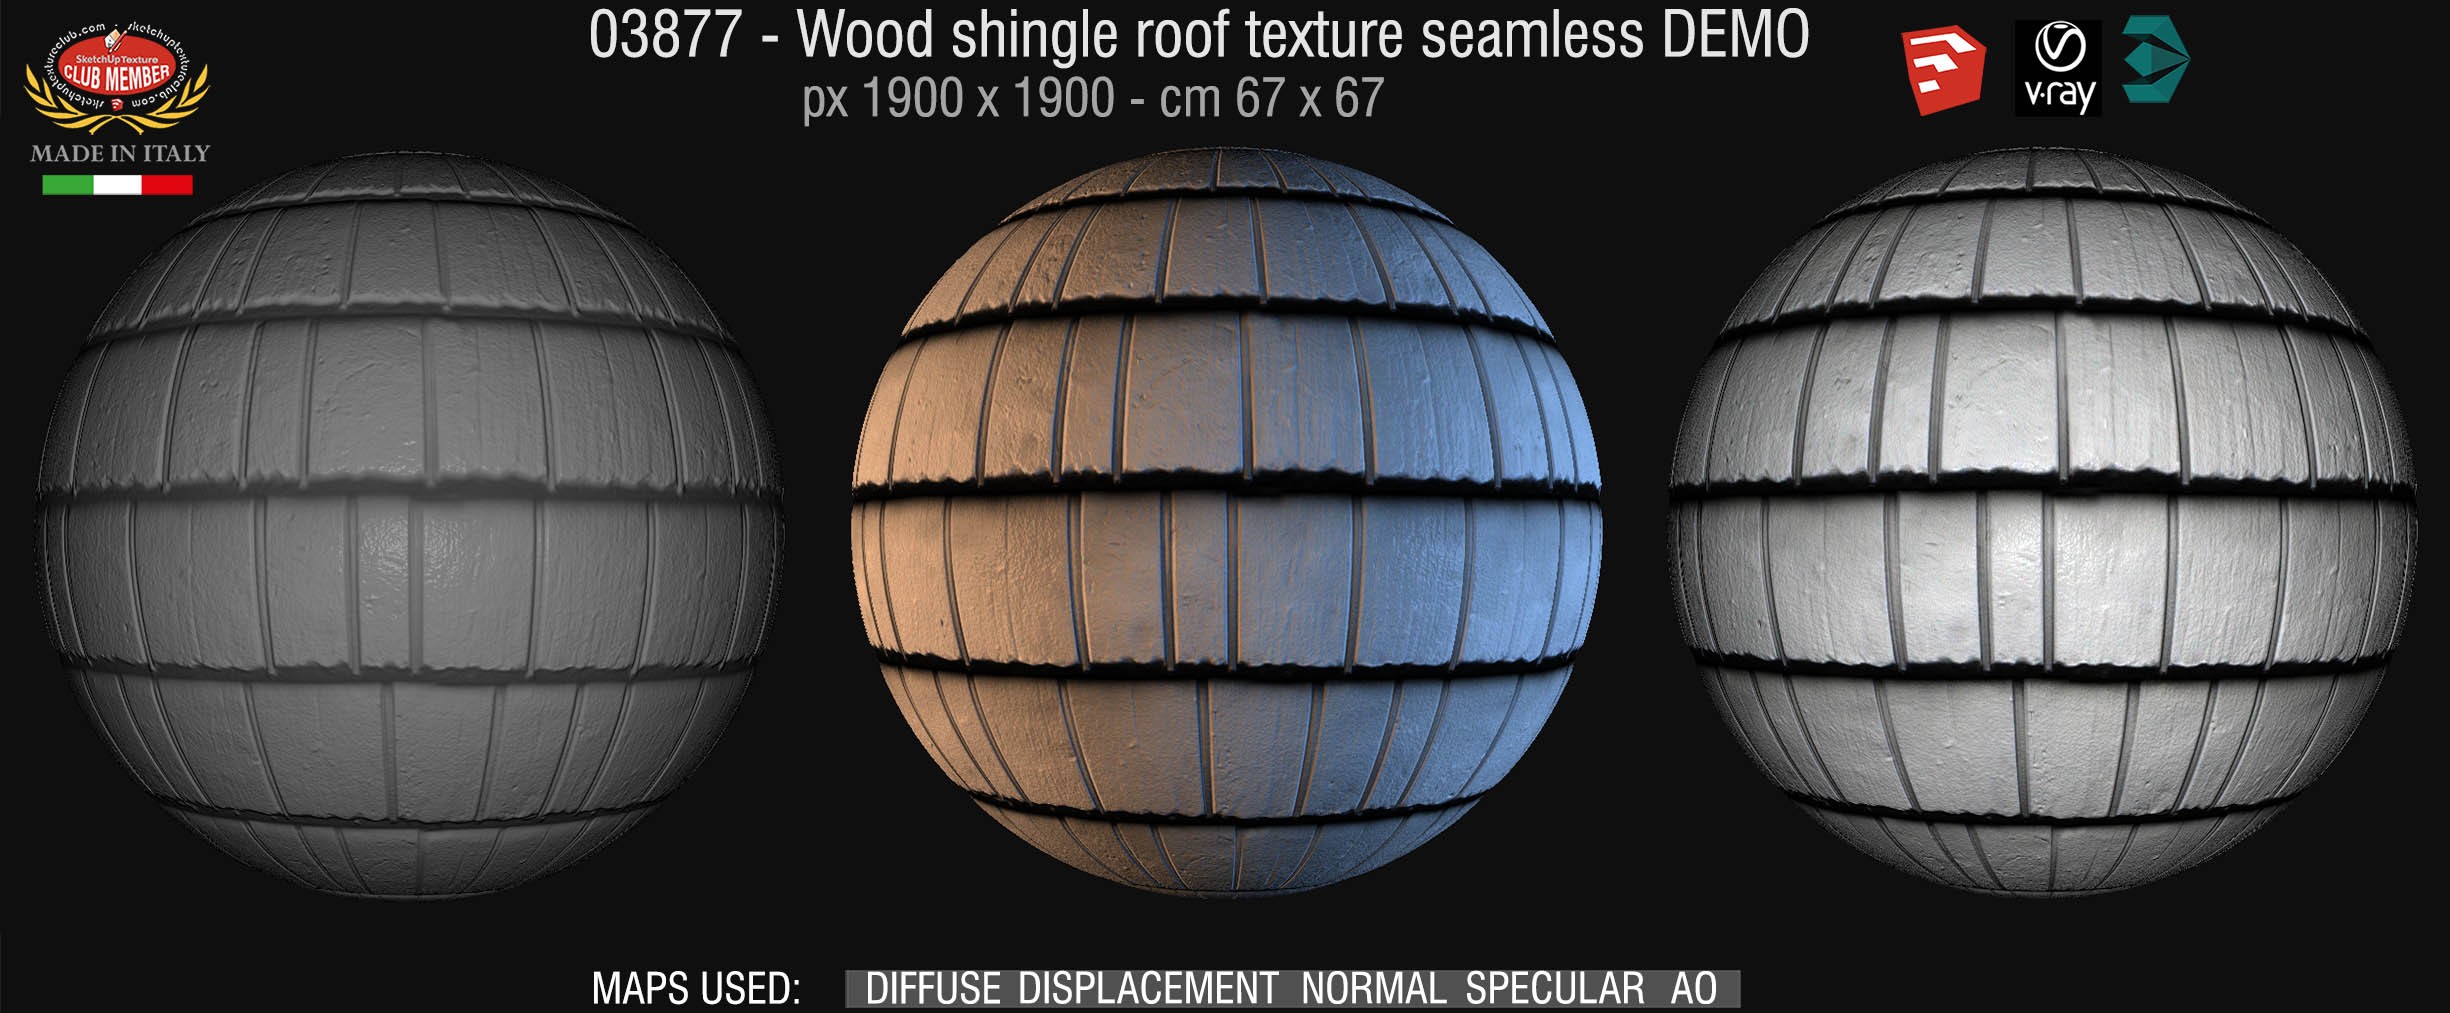 03877 Wood shingle roof texture seamless + maps DEMO